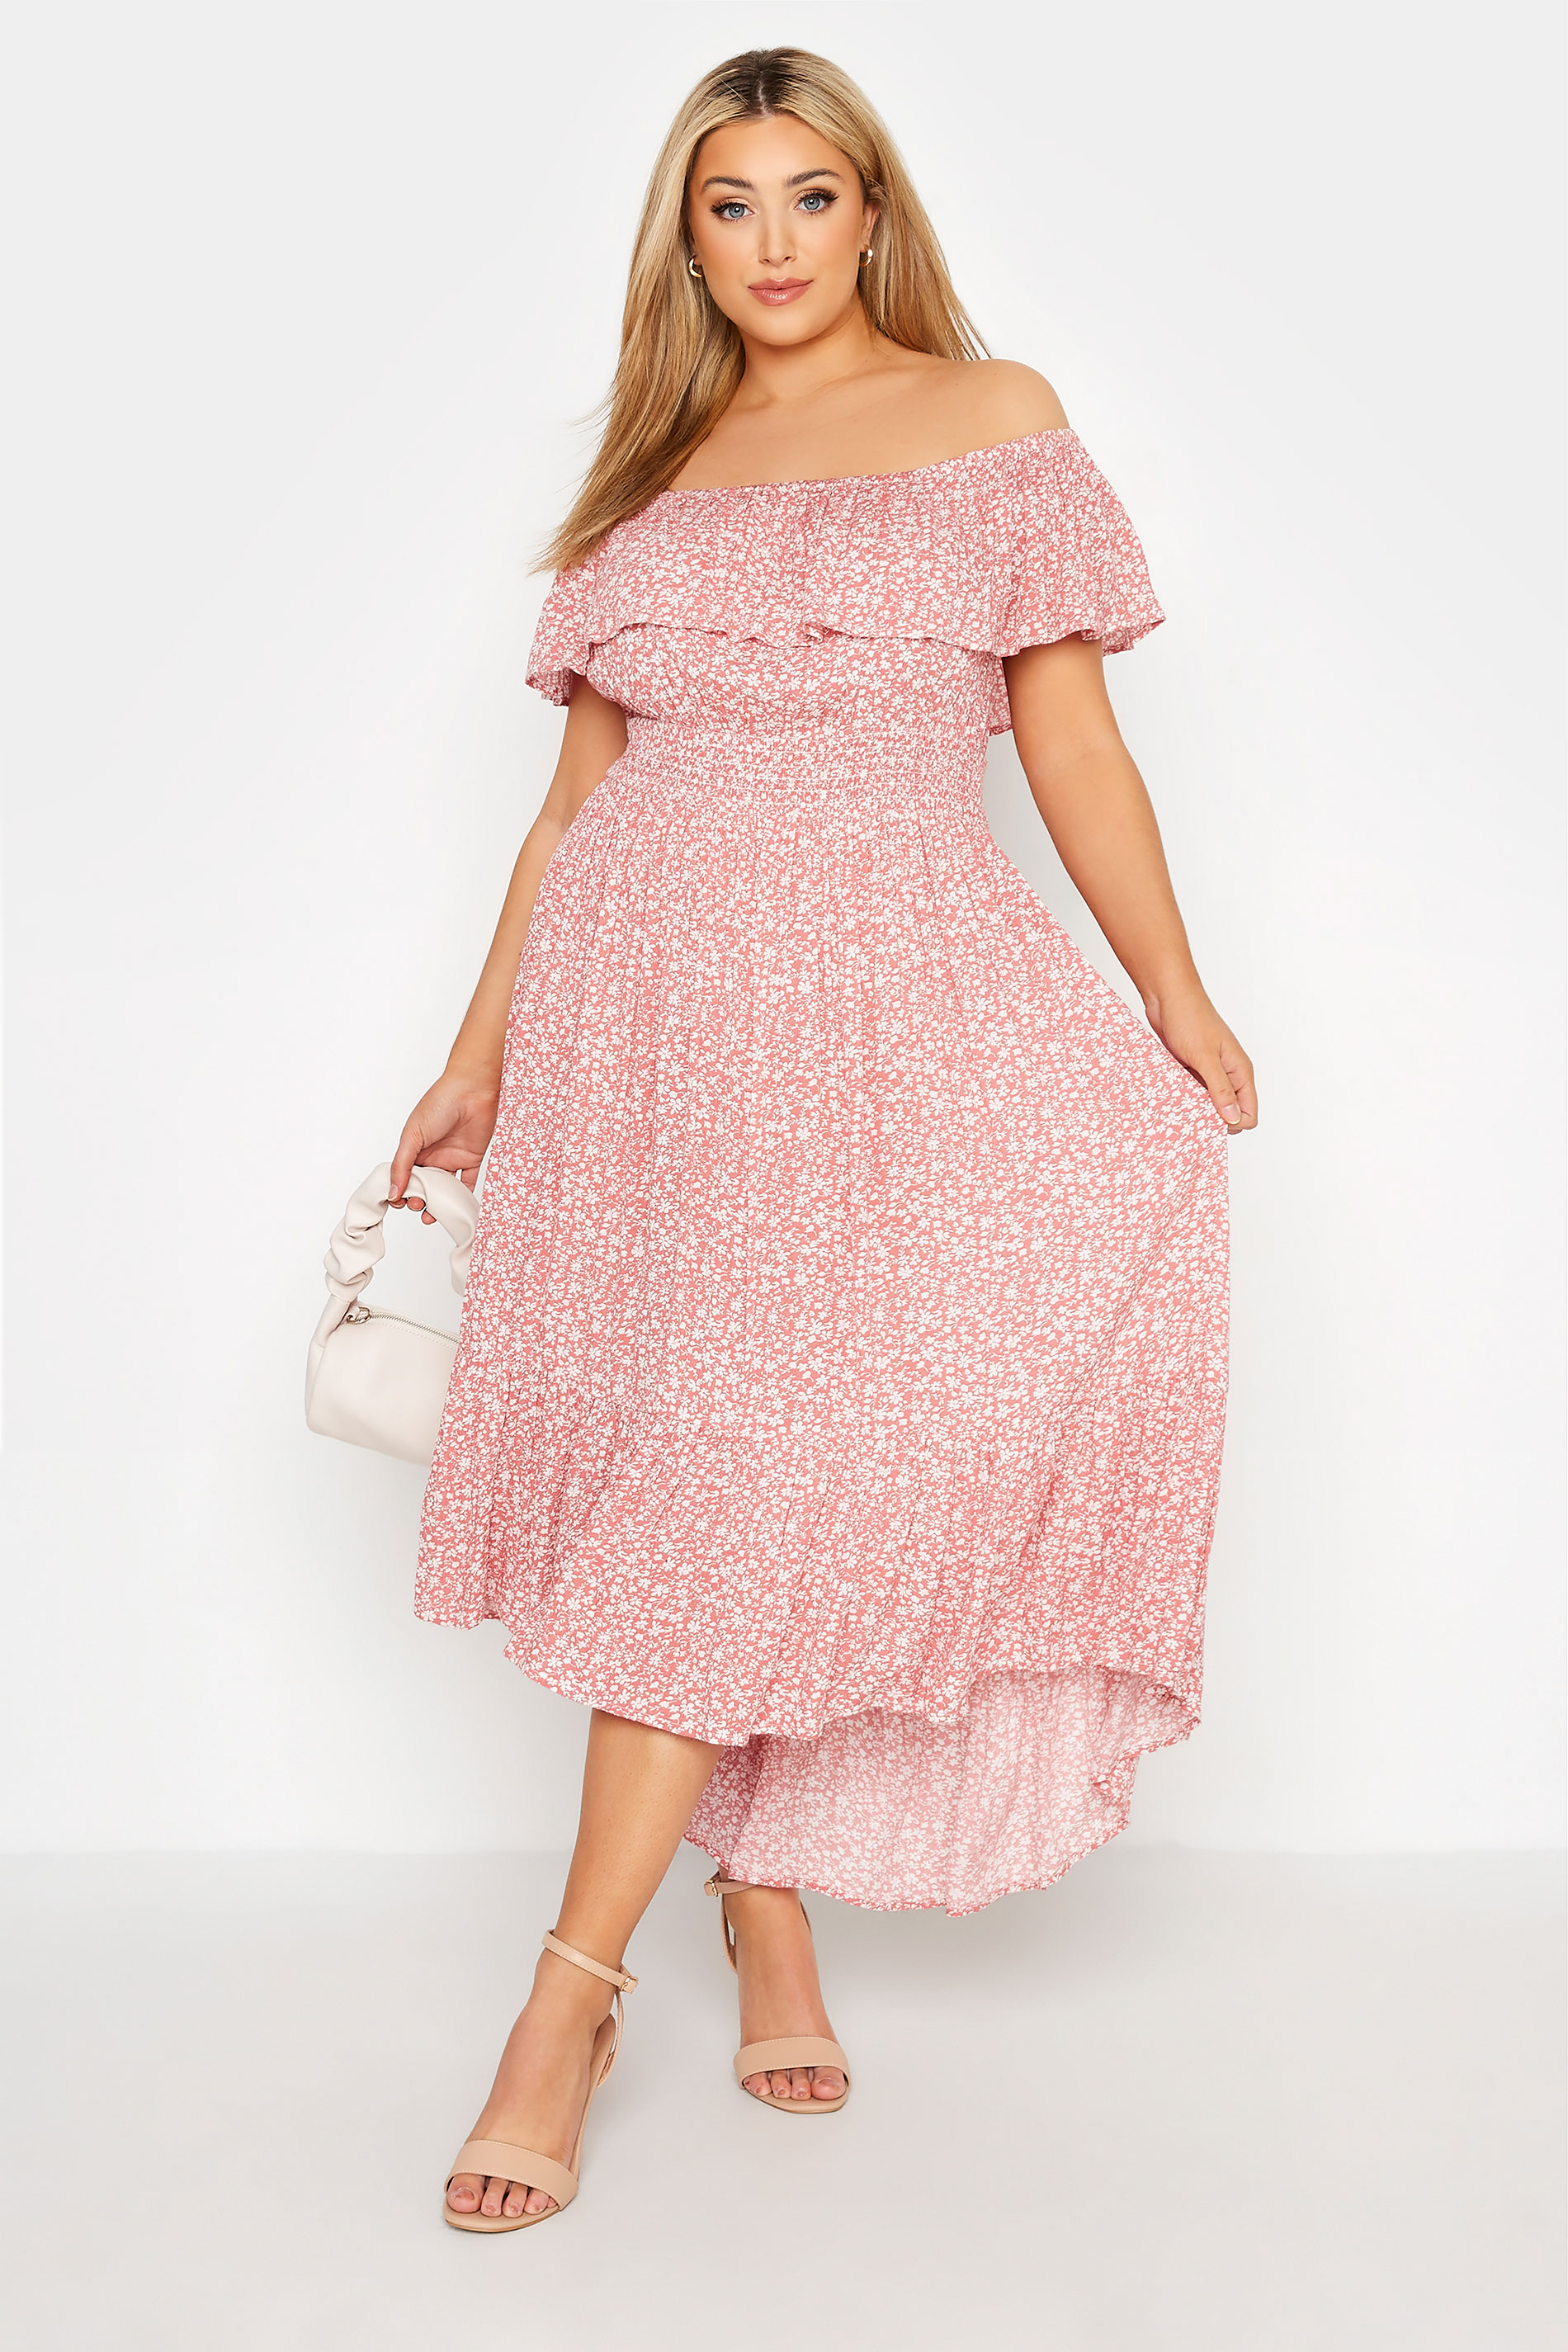 Robes Grande Taille Grande taille  Robes Style Bardot | YOURS LONDON - Robe Rose Floral Midi Design Bardot - JG86161